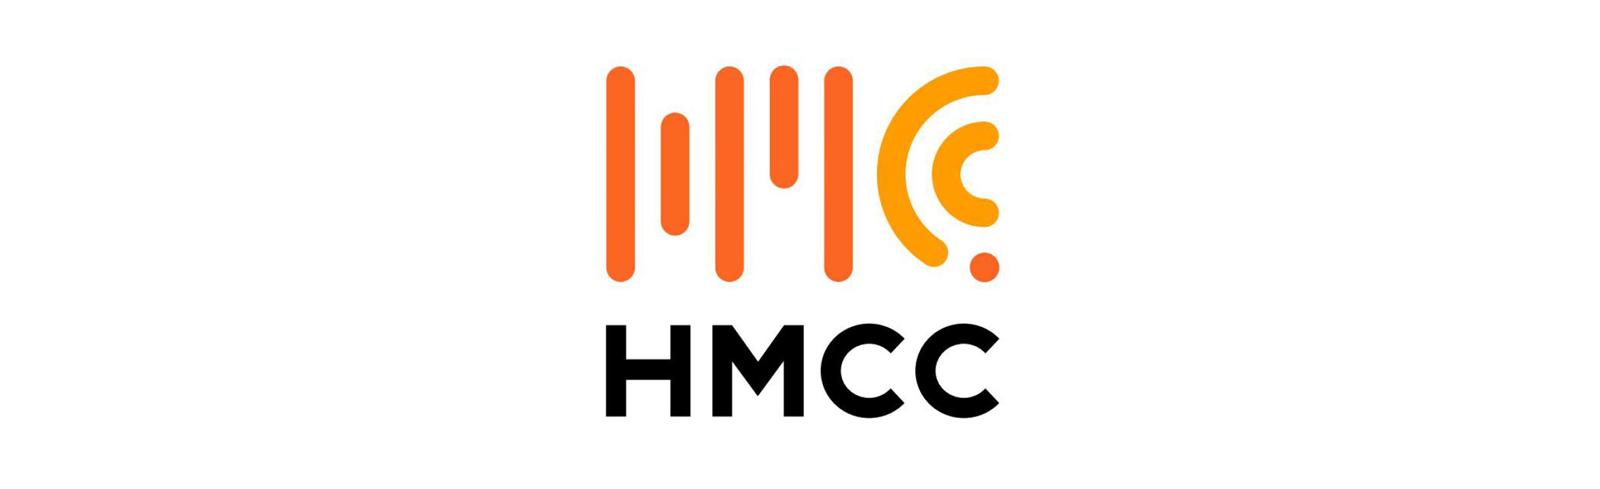 HMCC_Webinar_ABC-Site_Header_Placeholder_1600x489